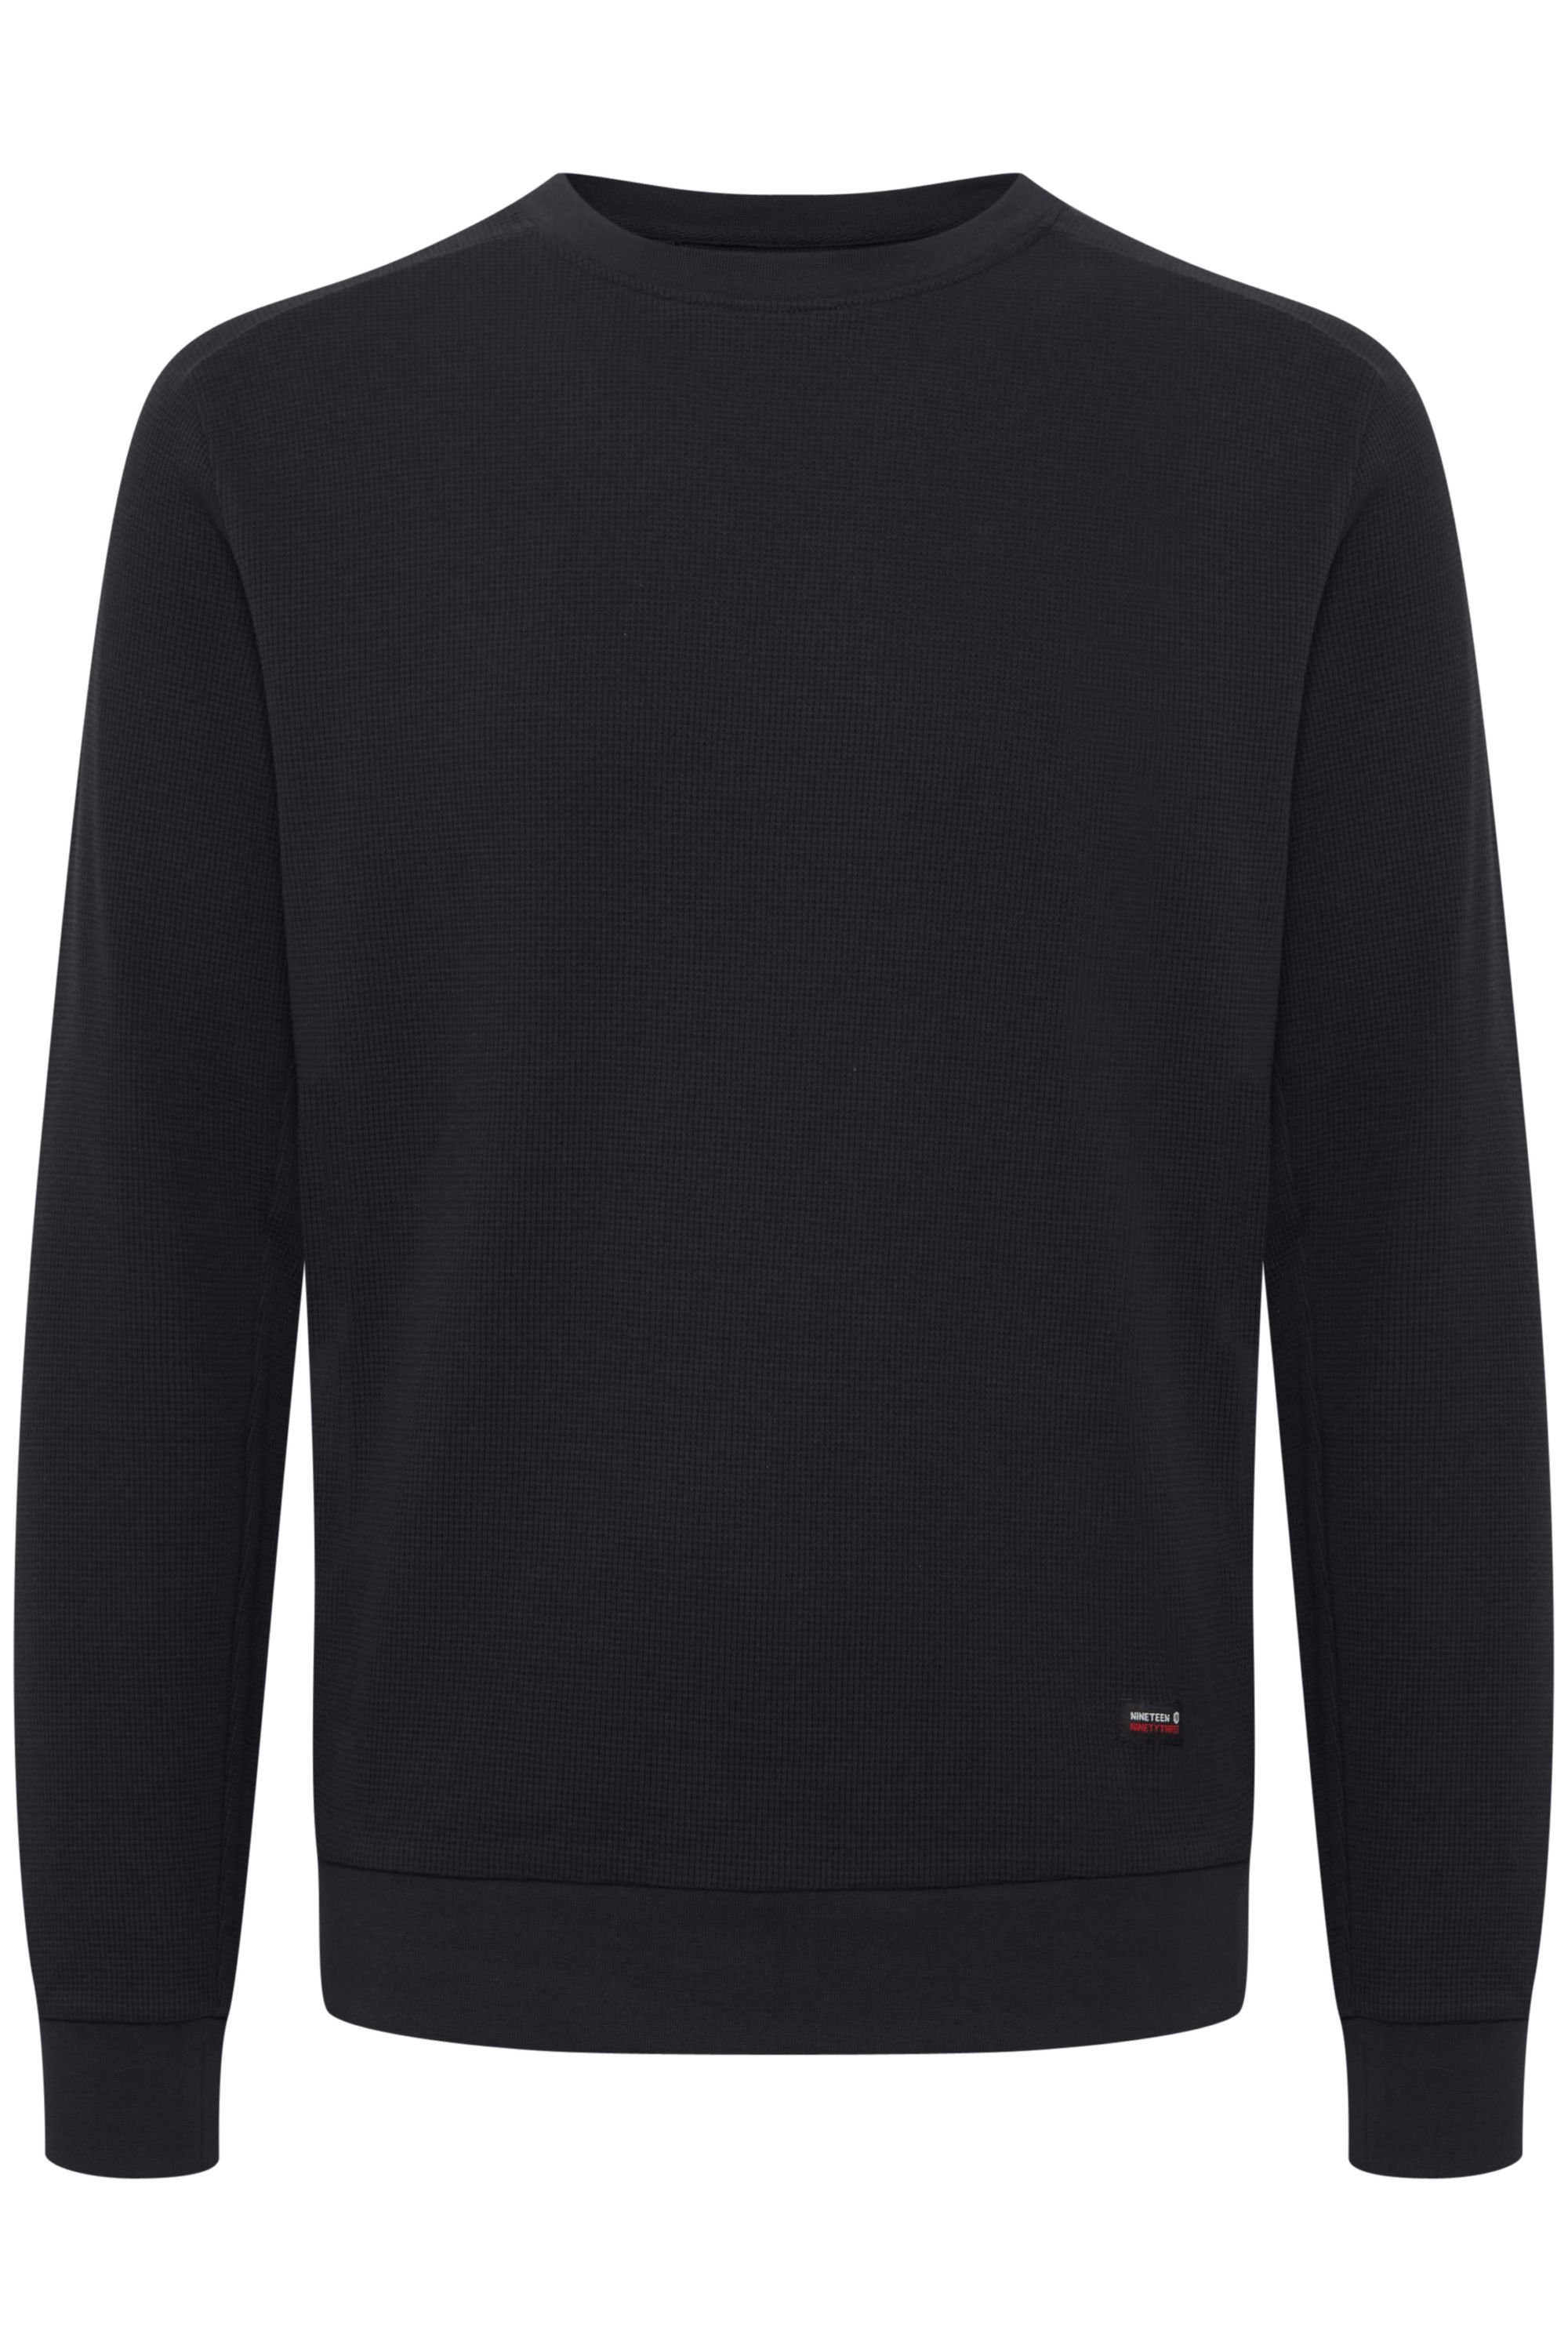 Indicode Sweatshirt IDNado 55585MM Black (999) | Sweatshirts